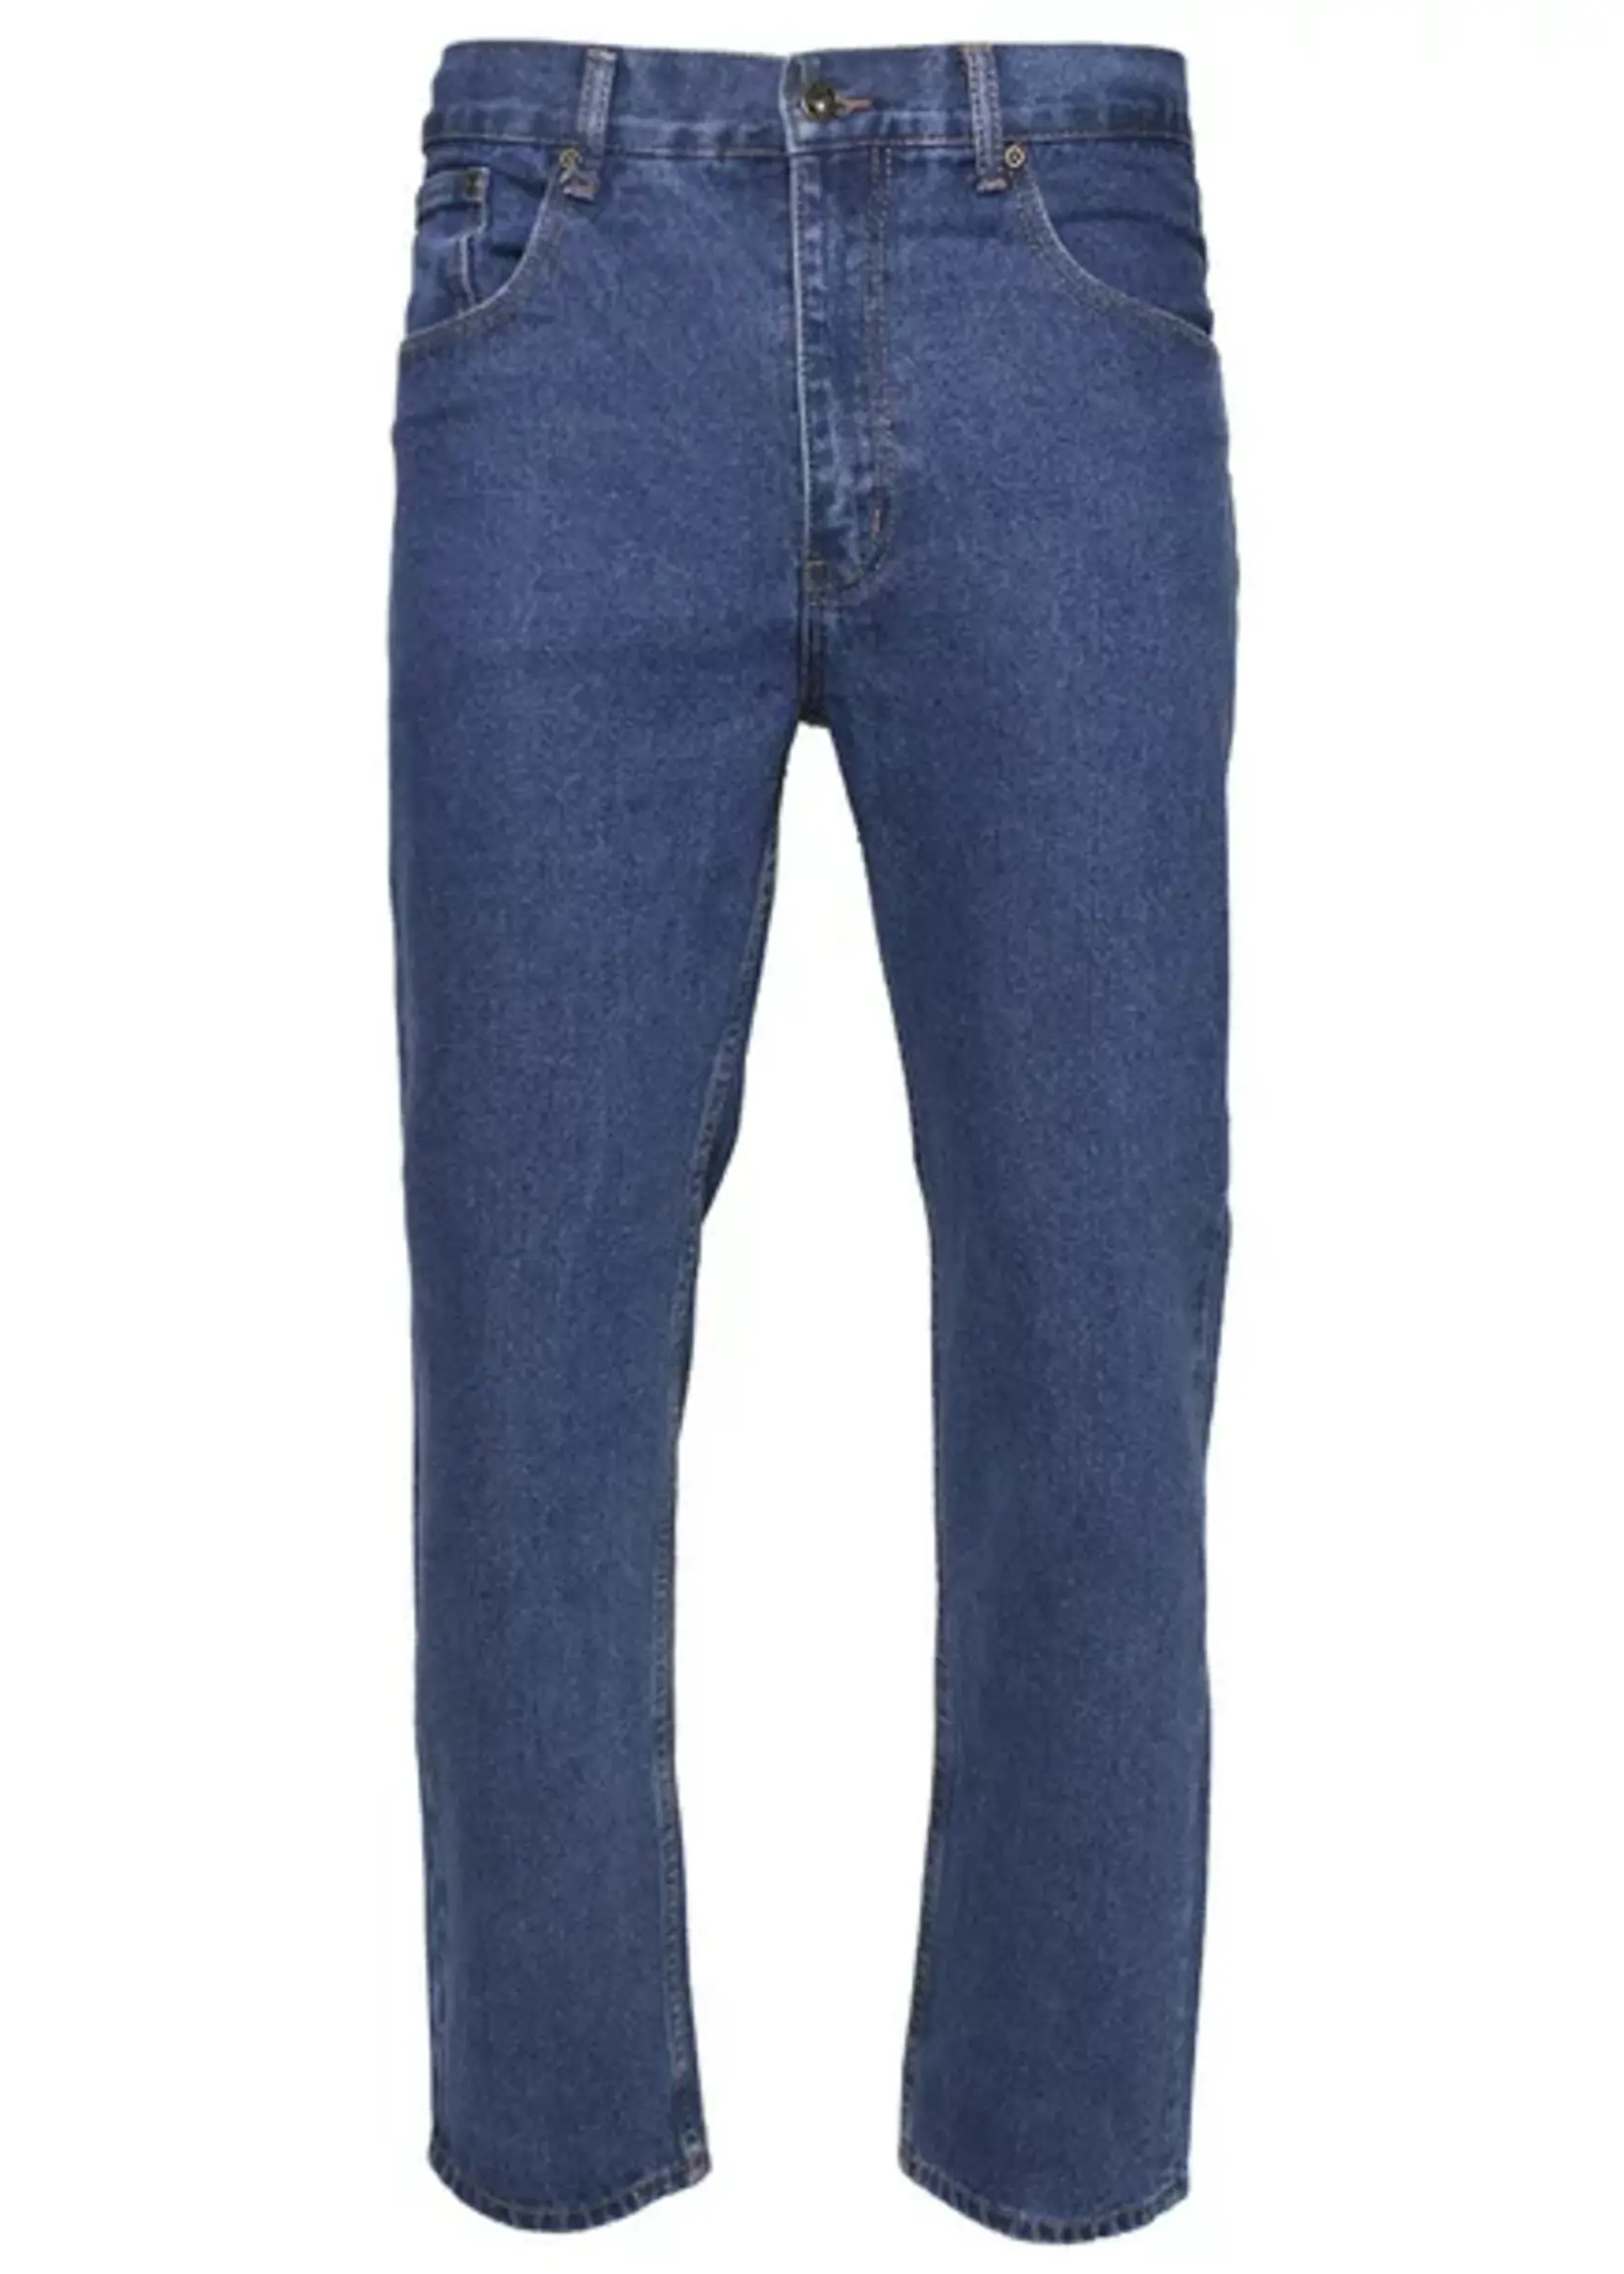 Oscar Jeans - CA999 - Oly's Home Fashion